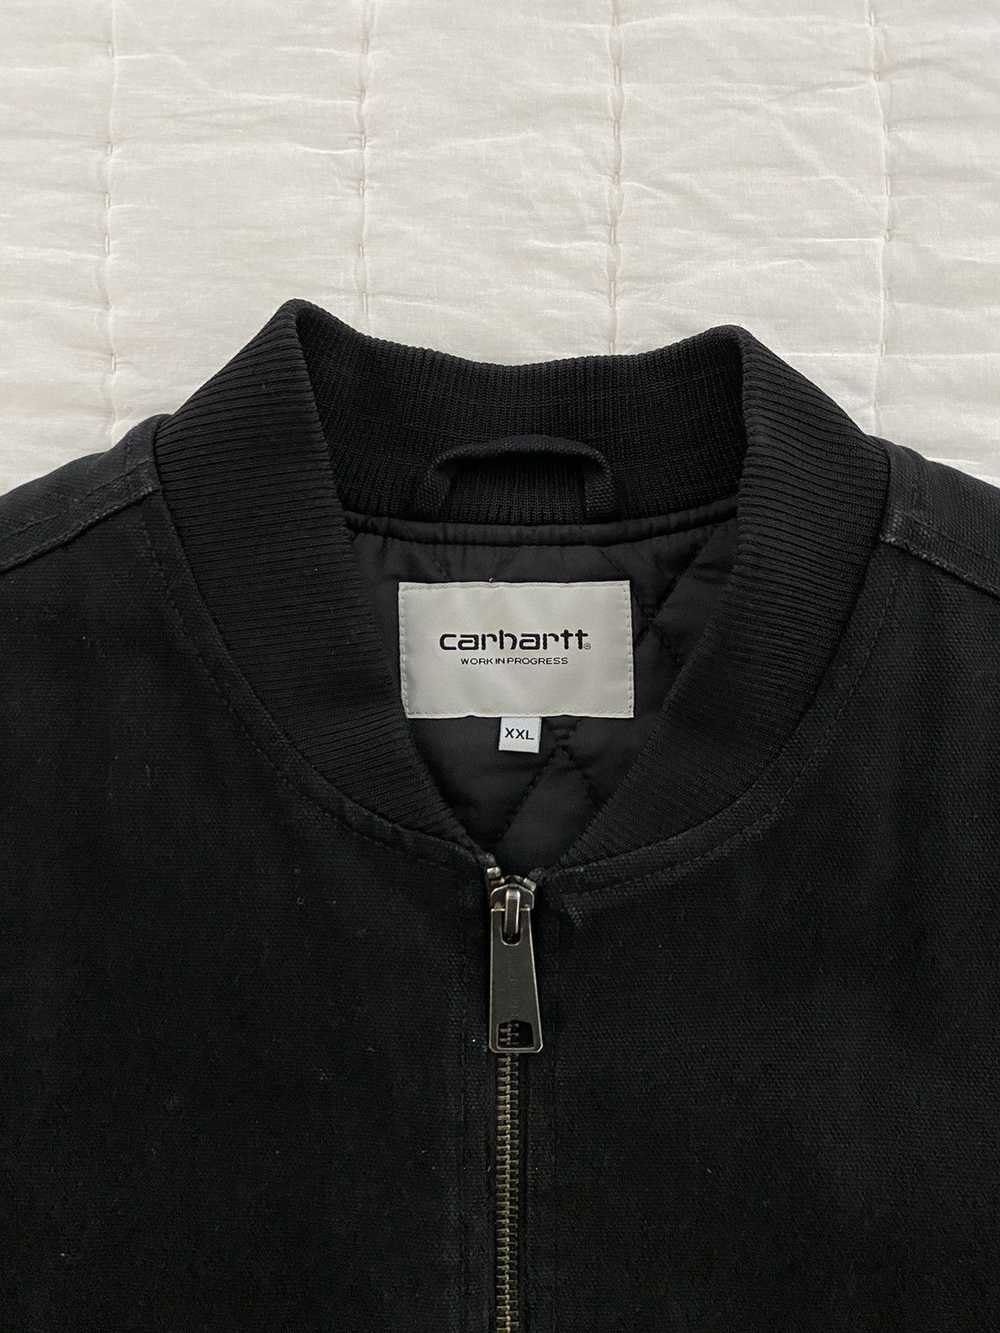 Carhartt Wip Carhartt WIP Black Canvas Vest - image 6